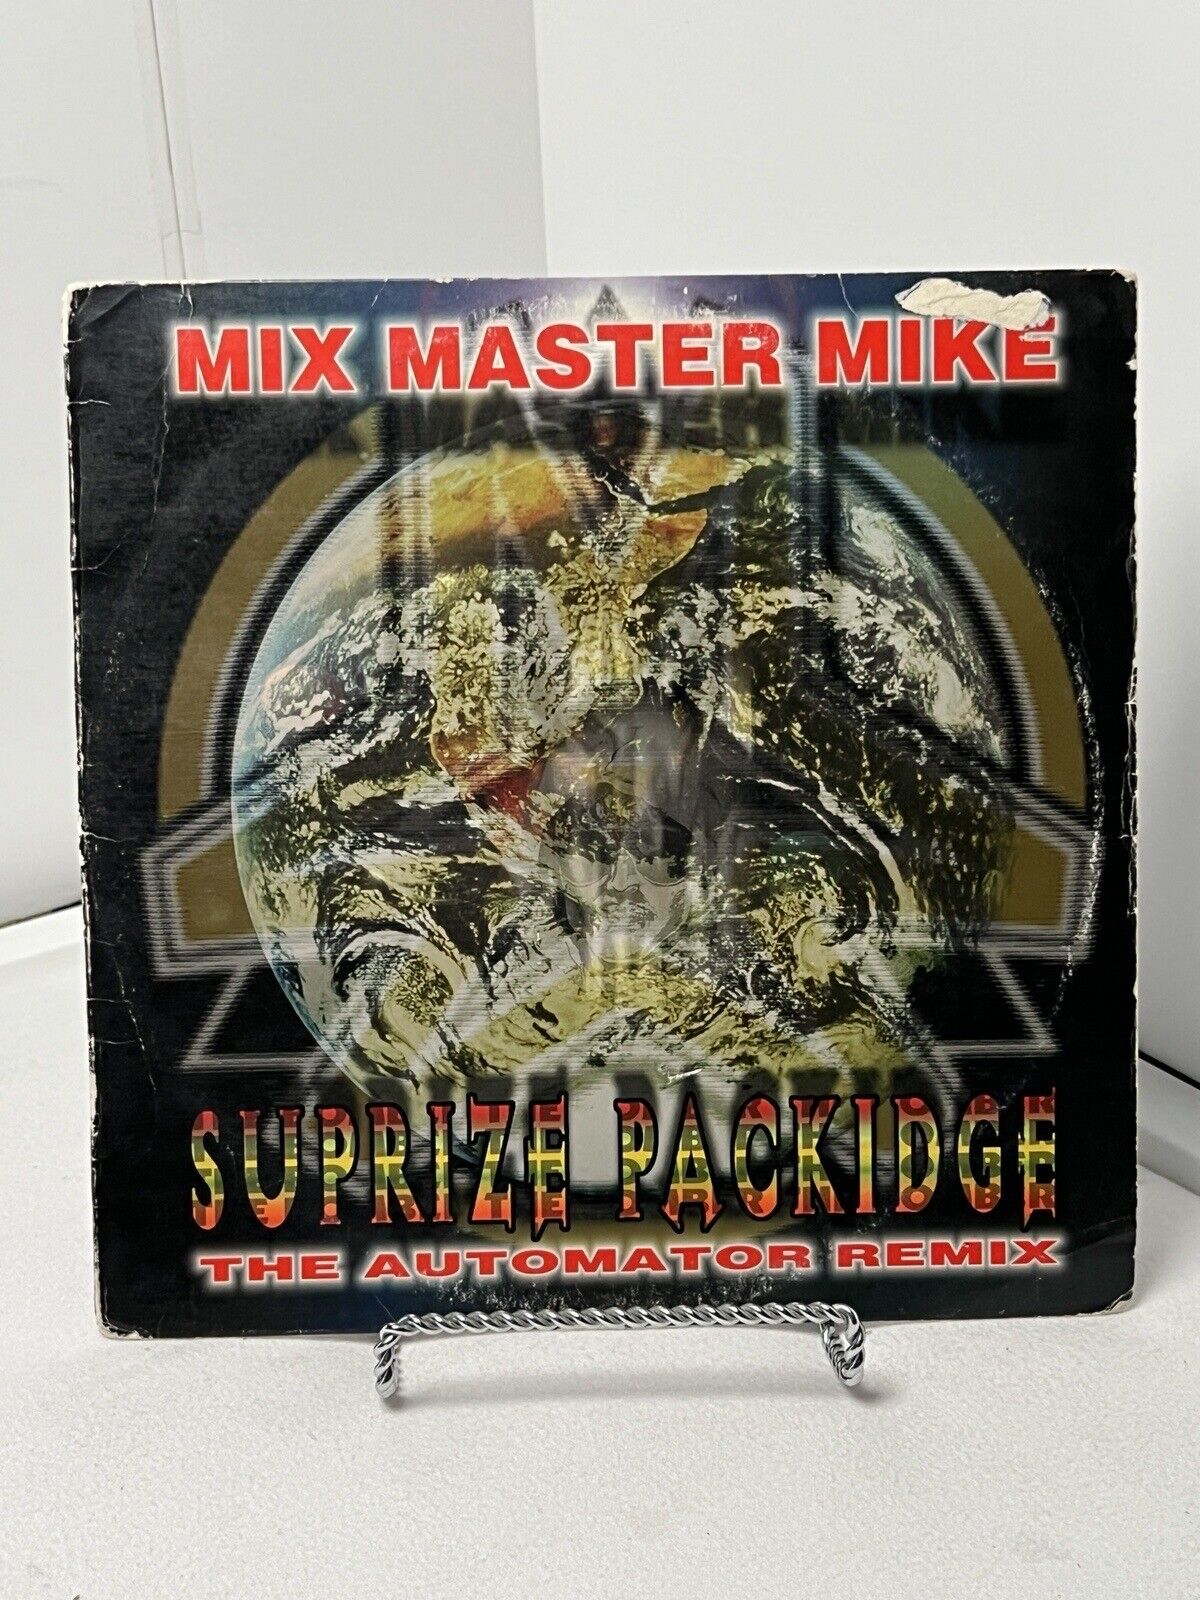 Mix Master Mike – Suprize Packidge (The Automator Remix) ASP 0118 12